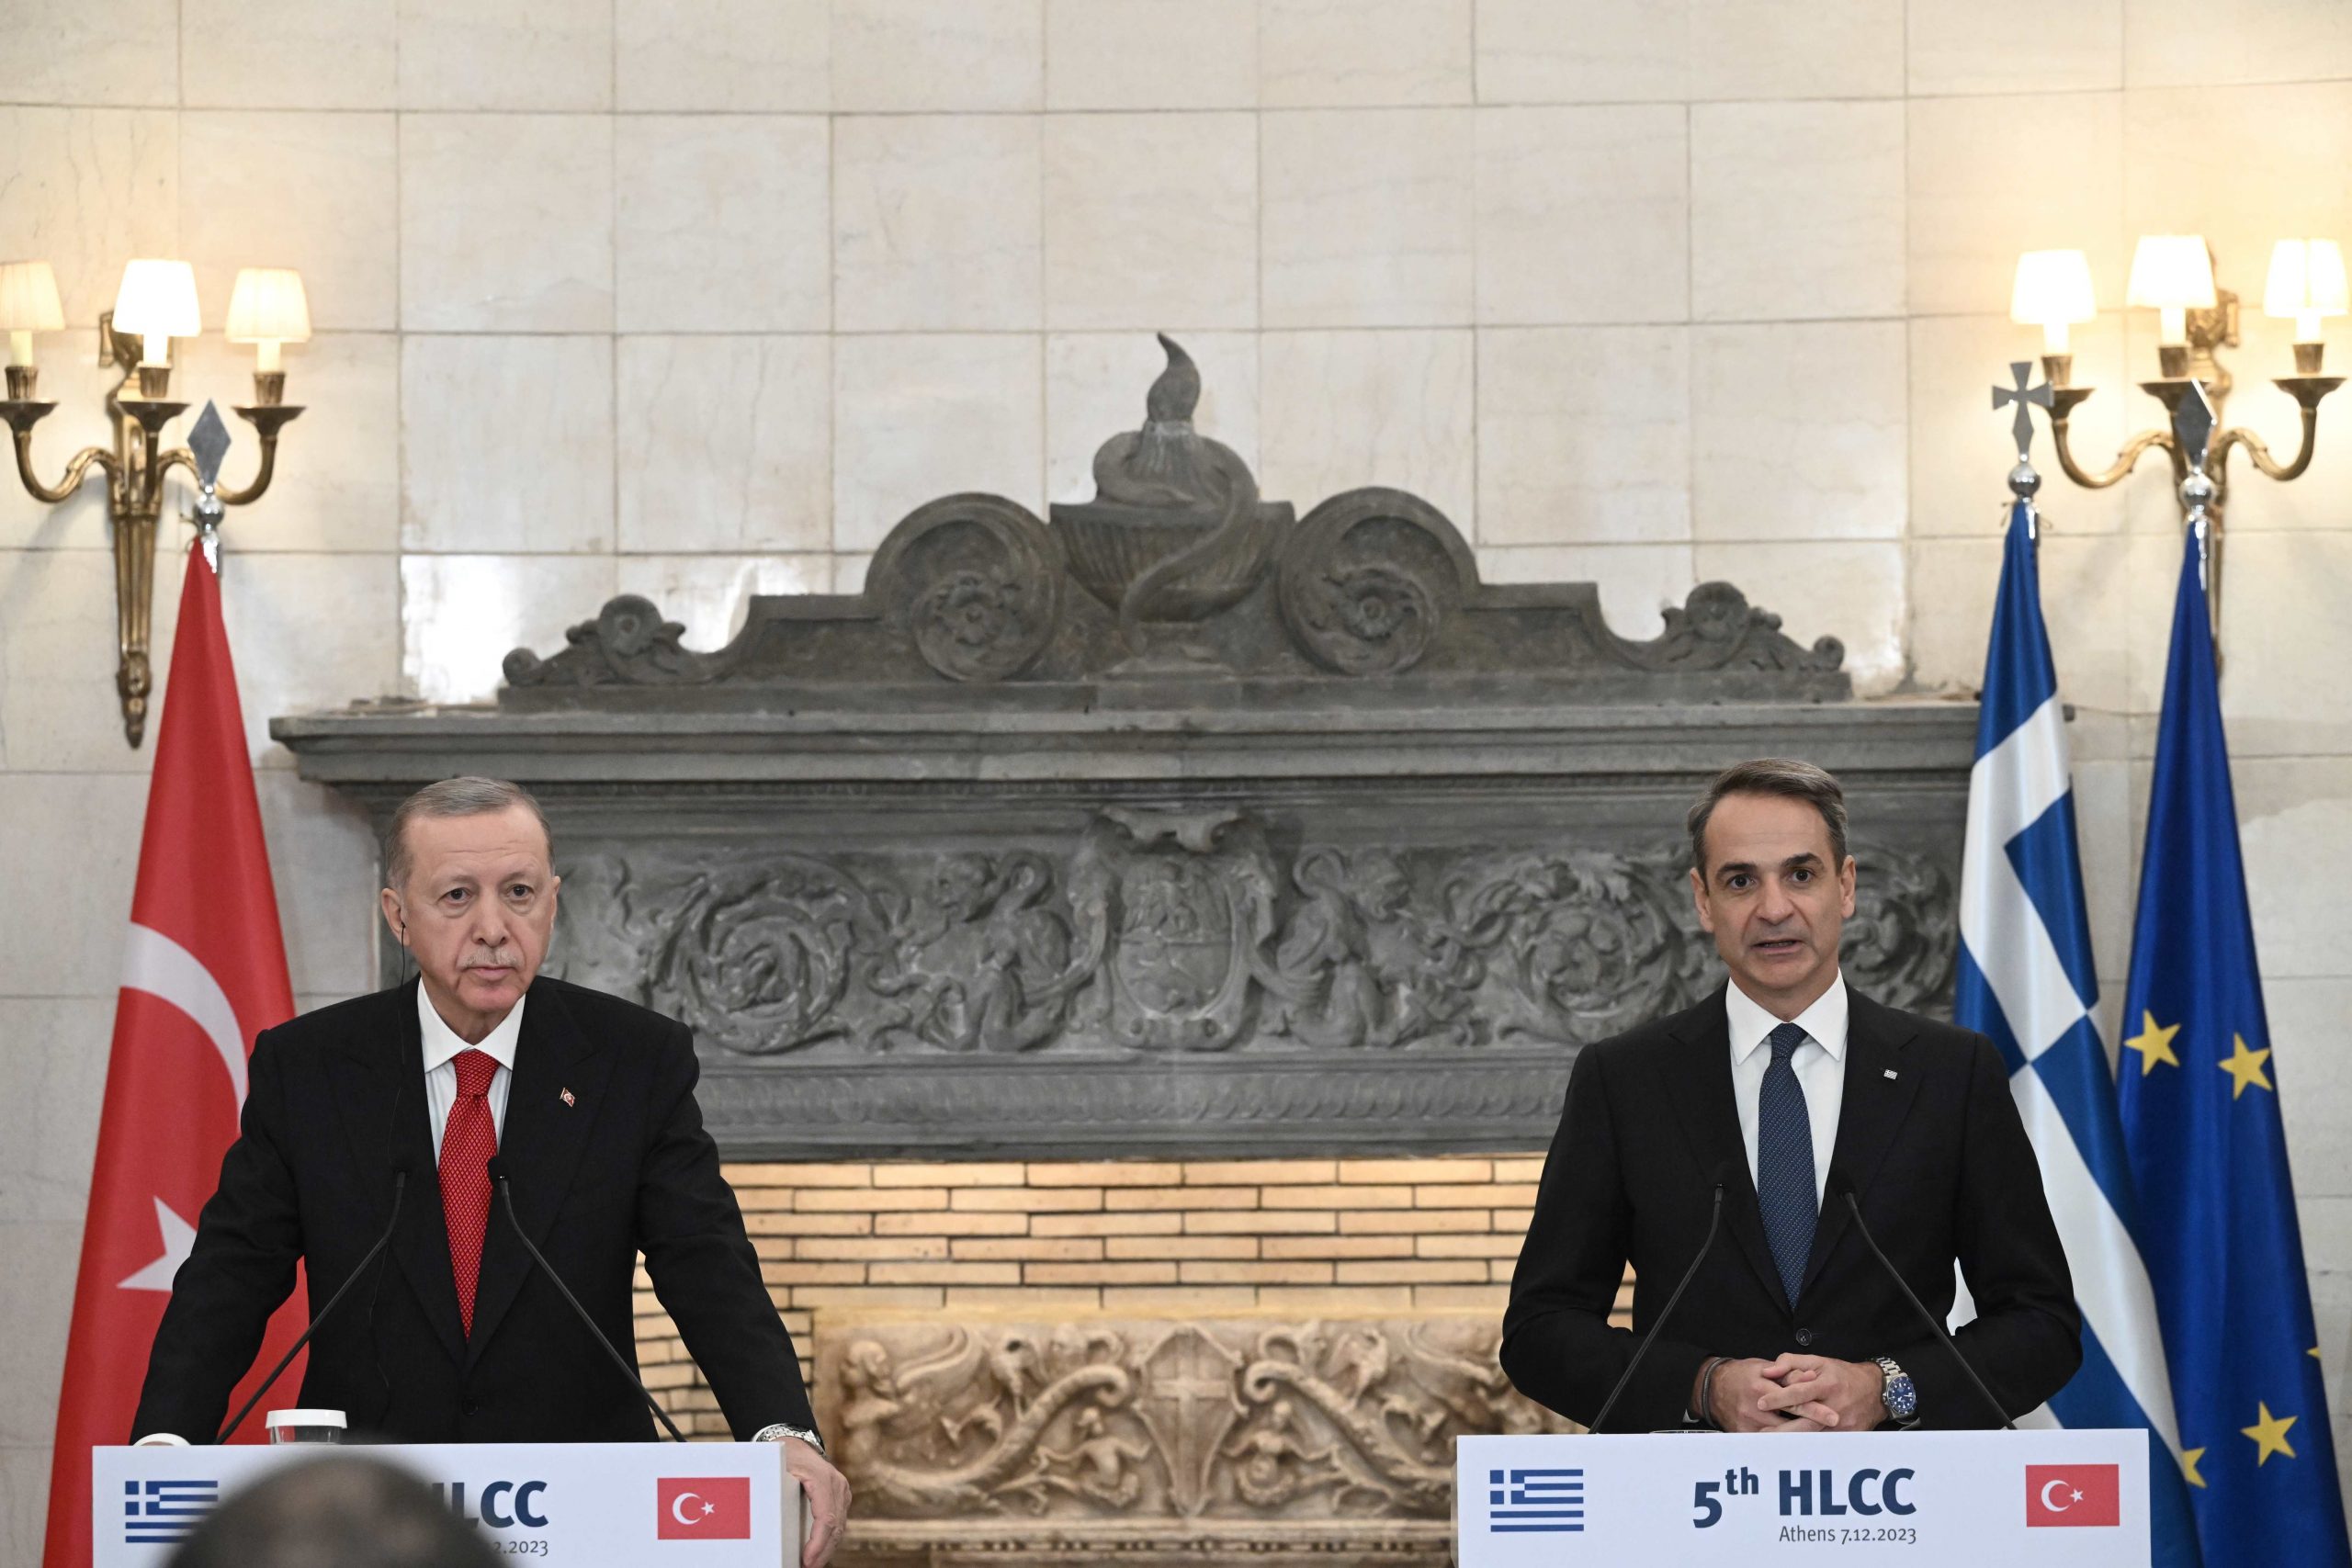 Erdogan Refers to ‘Turkish’ Minority in Thrace, Mitsotakis Responds With Correct ‘Muslim Minority’